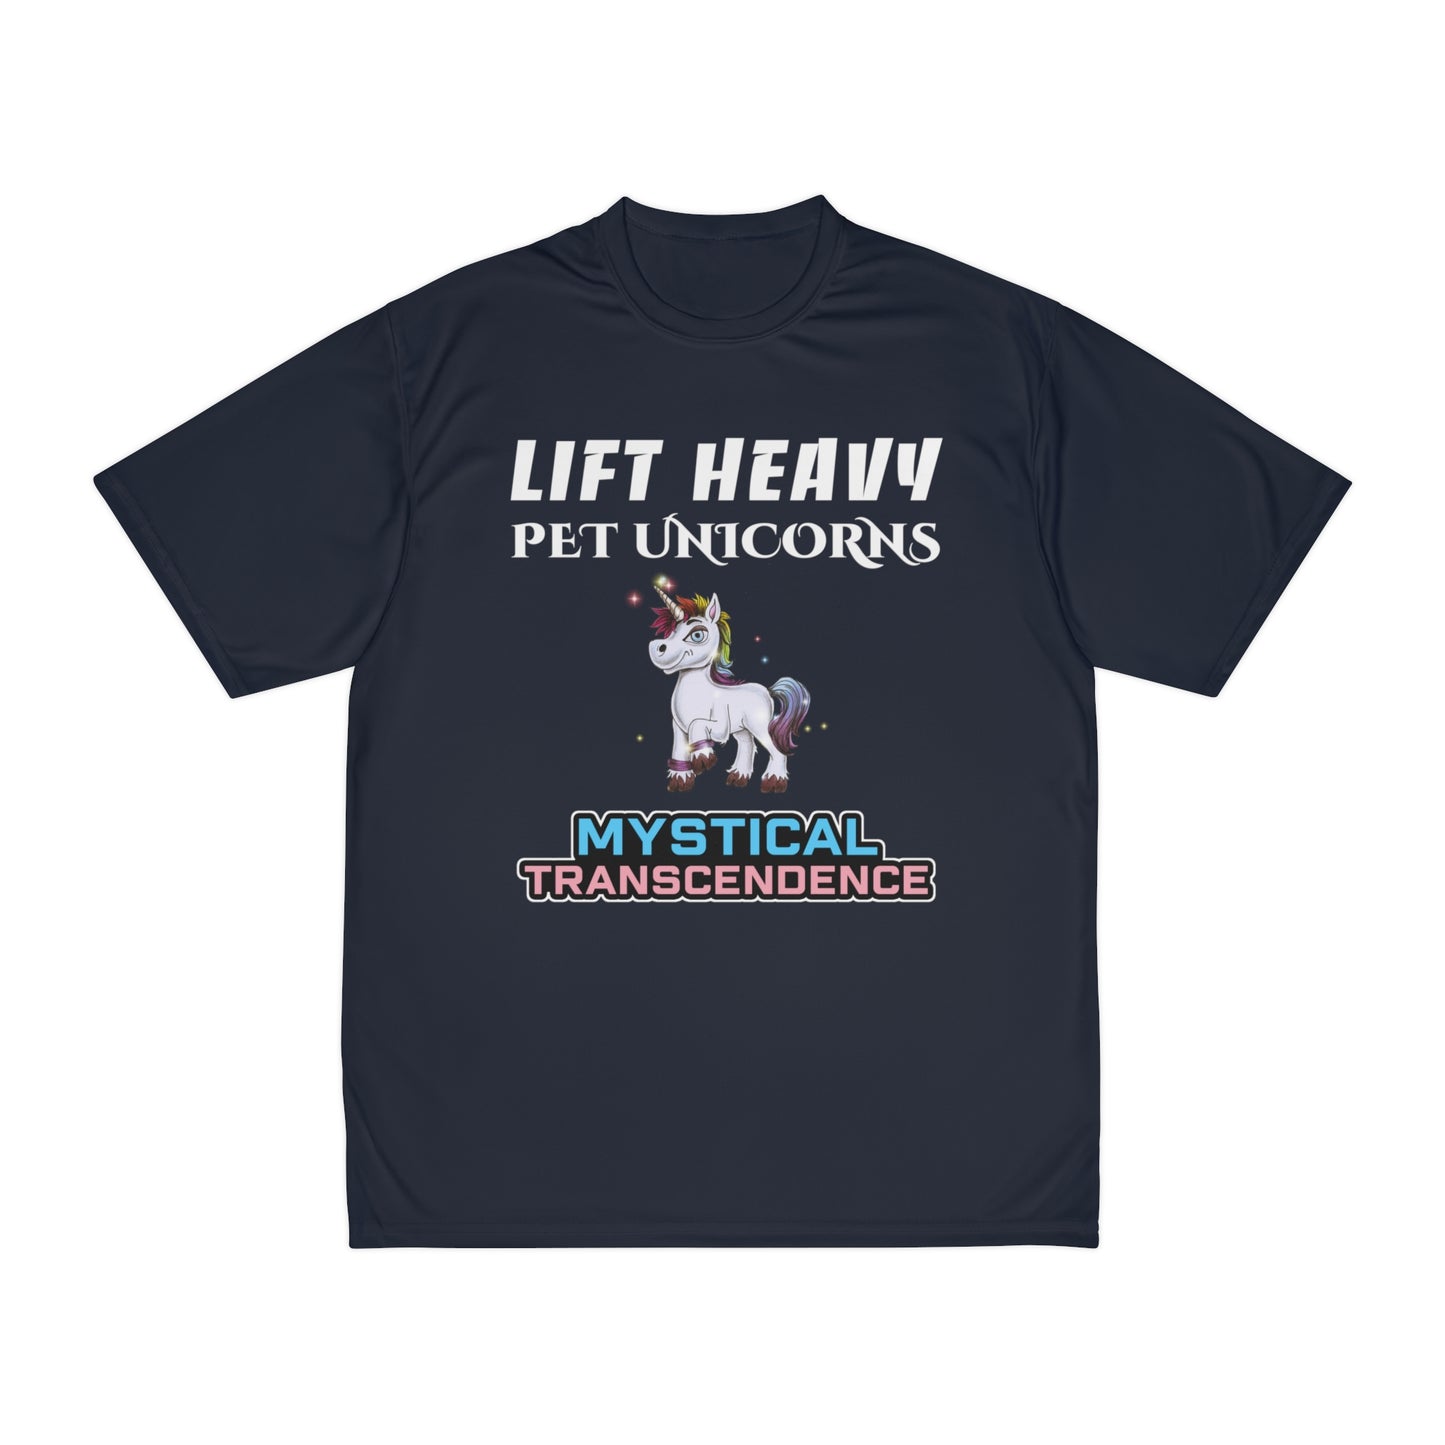 Lift Heavy Pet Unicorns Performance T-Shirt